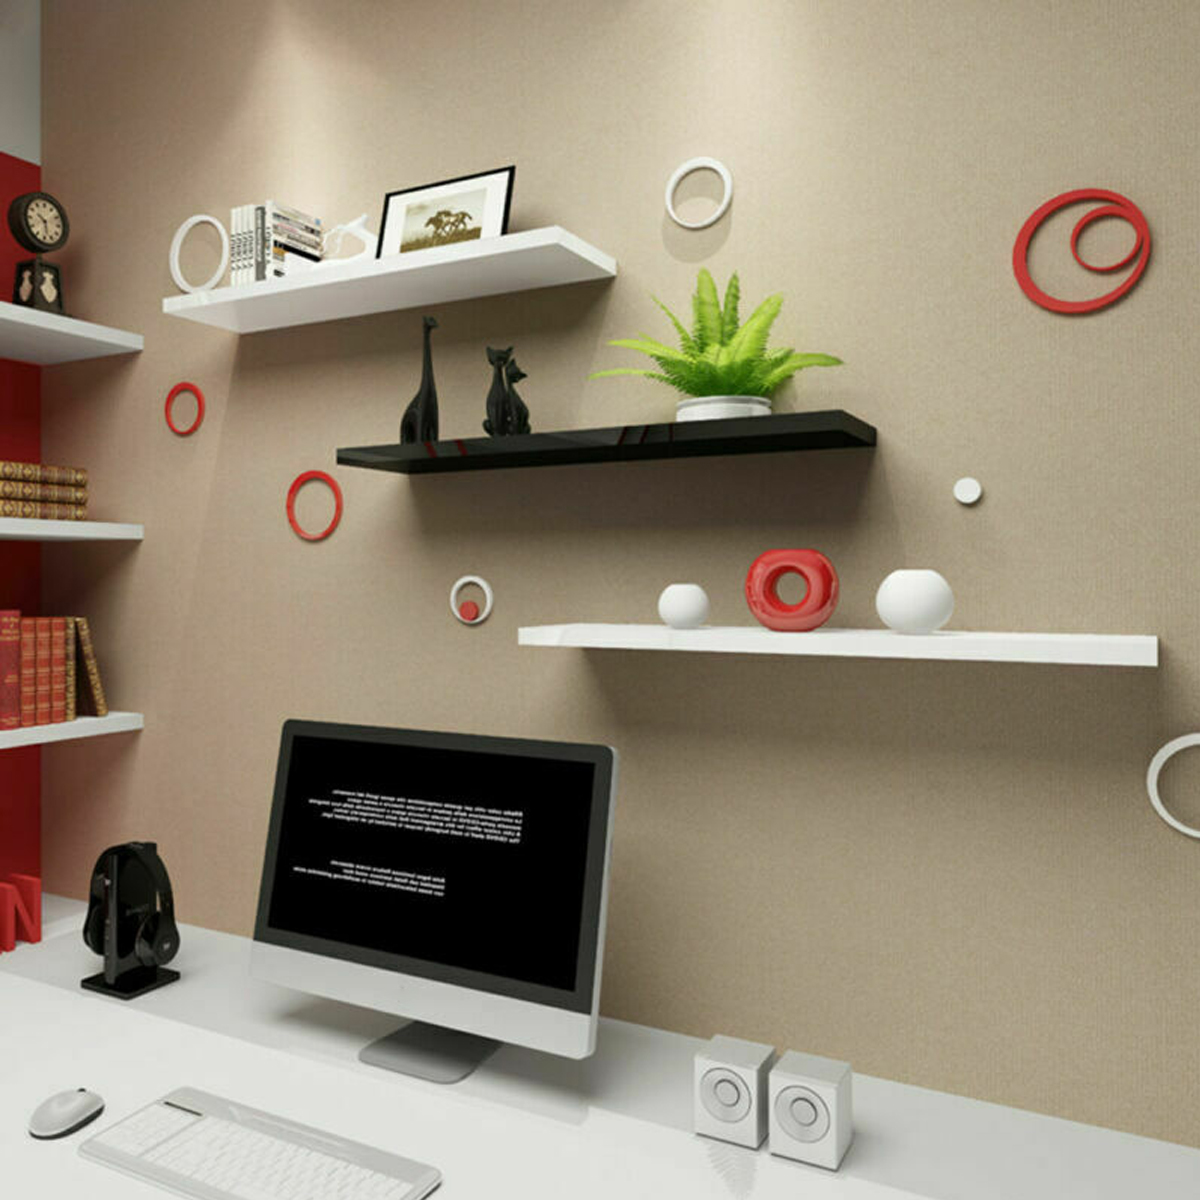 4-PcsSet-DIY-Wall-Shelves-Shelf-Floating-Display-Decor-Home-Wood-Wall-Mounted-1841567-13